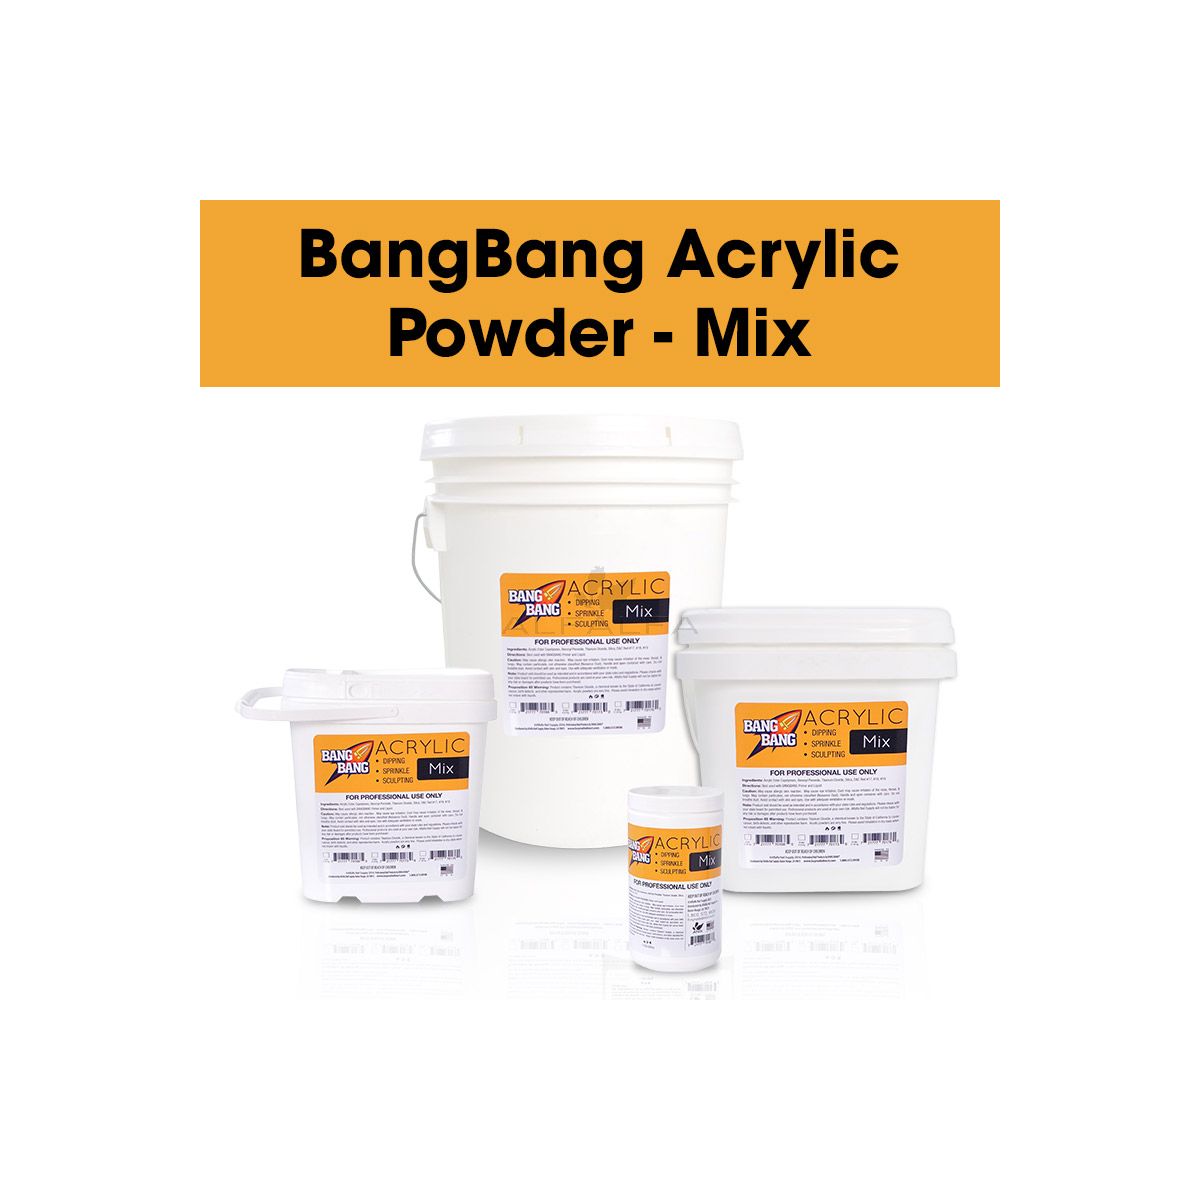 BangBang Acrylic Powder - Mix